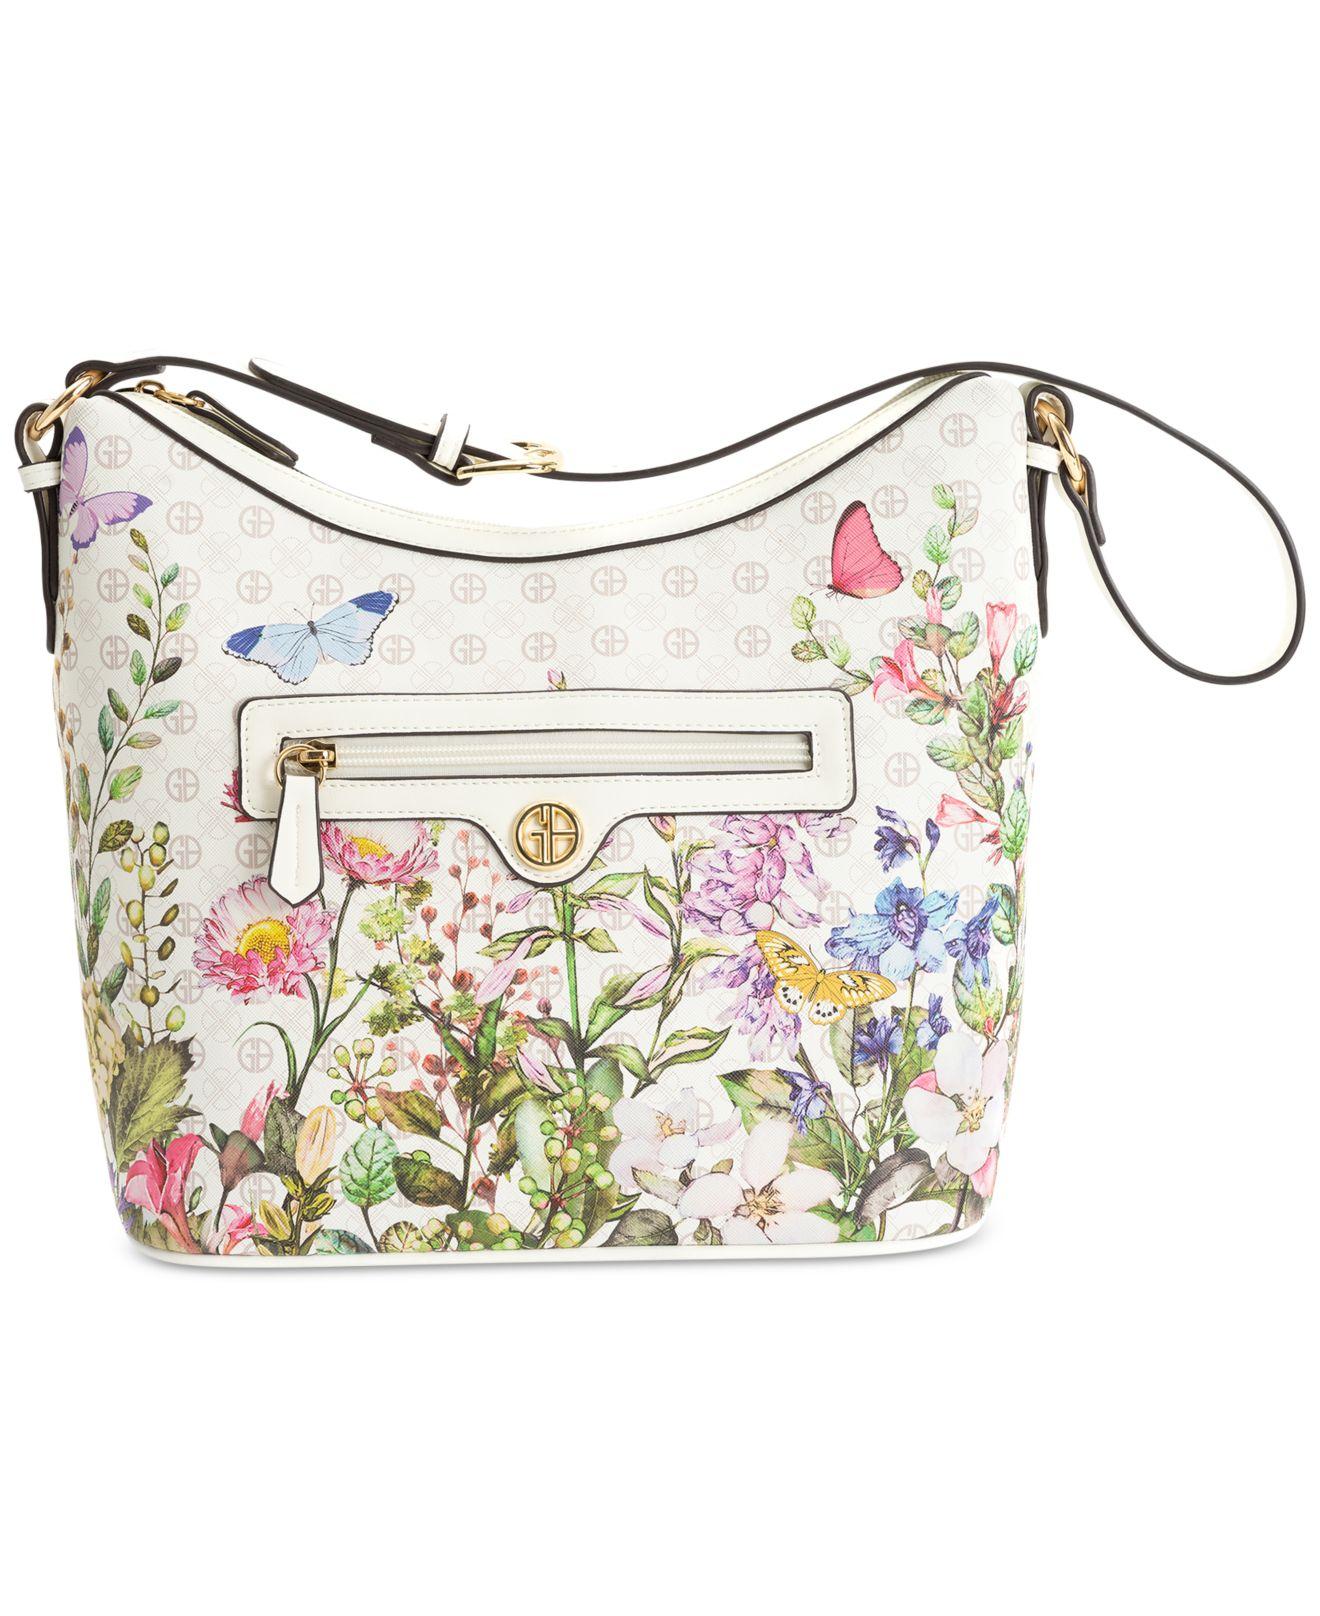 Handbag By Giani Bernini Size: Small